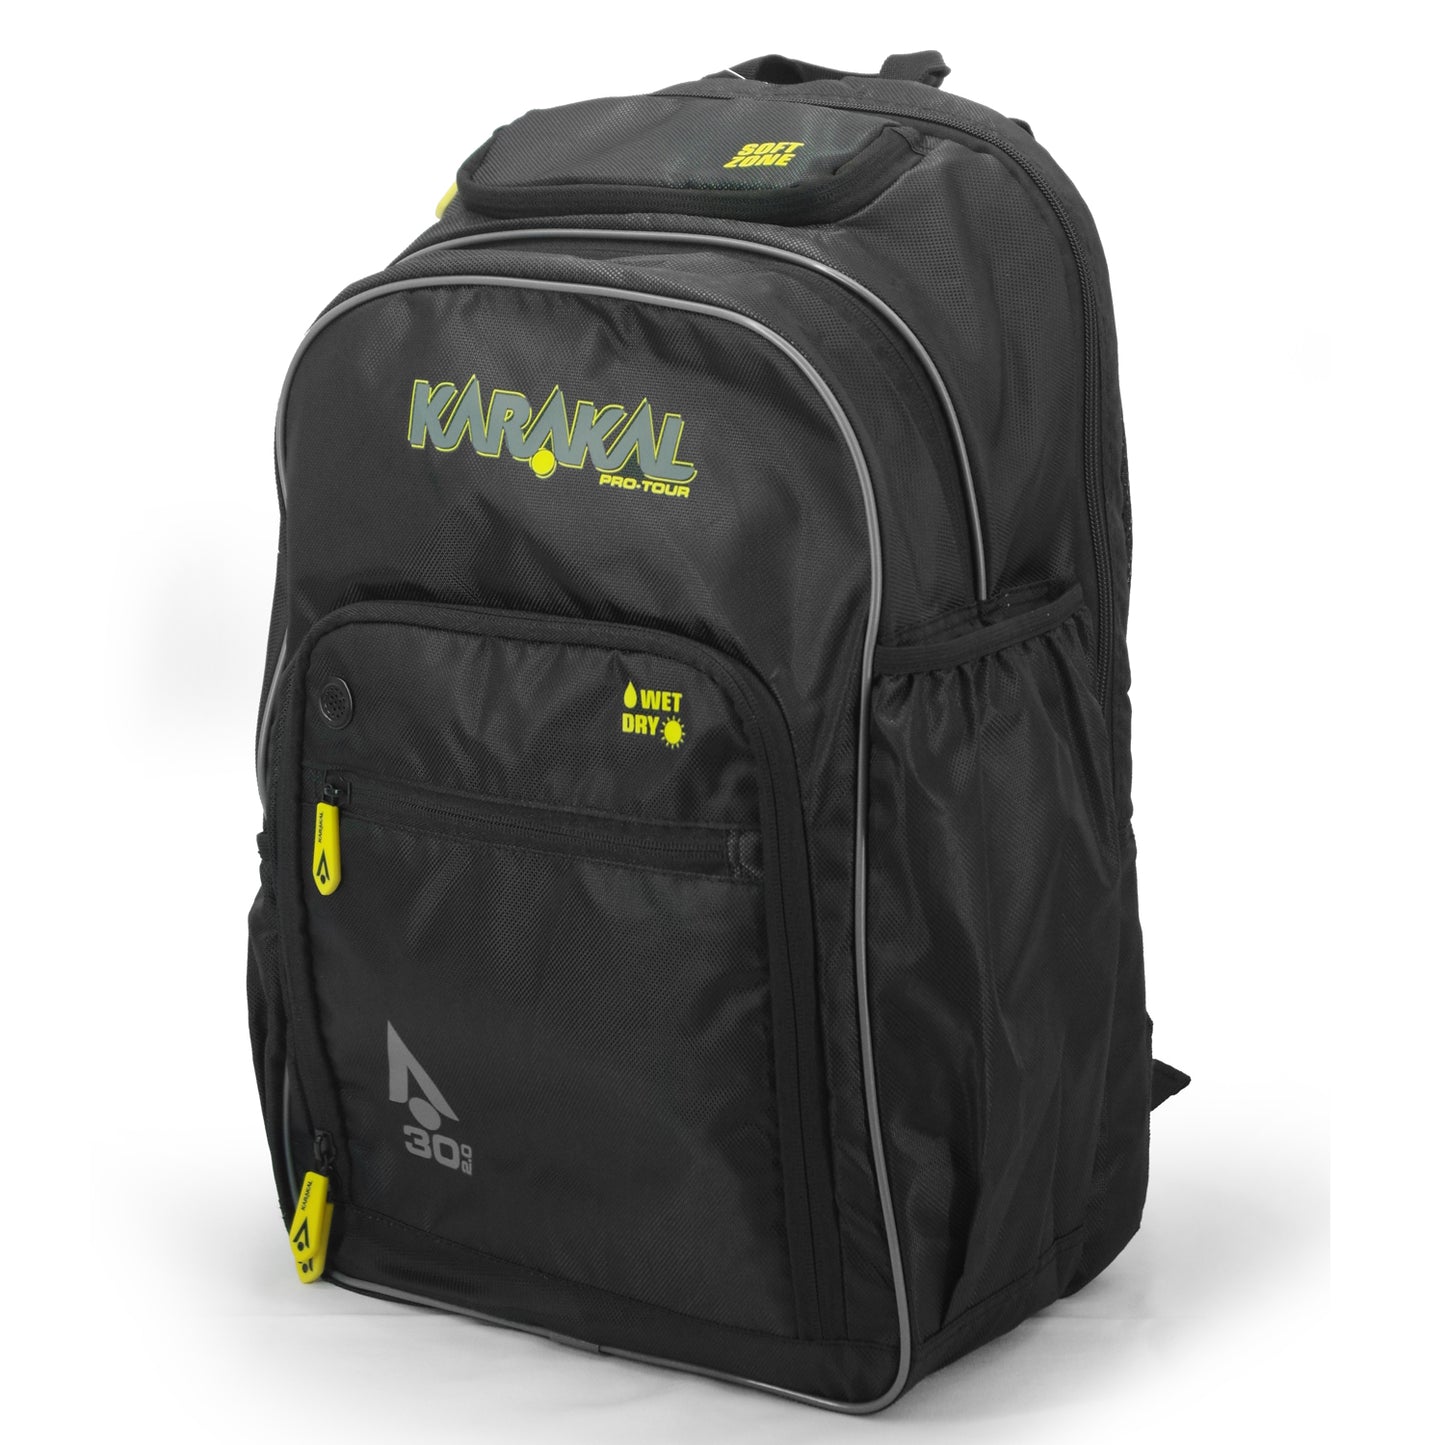 Karakal Pro Tour 30 2.0 Backpack with Yellow Trim